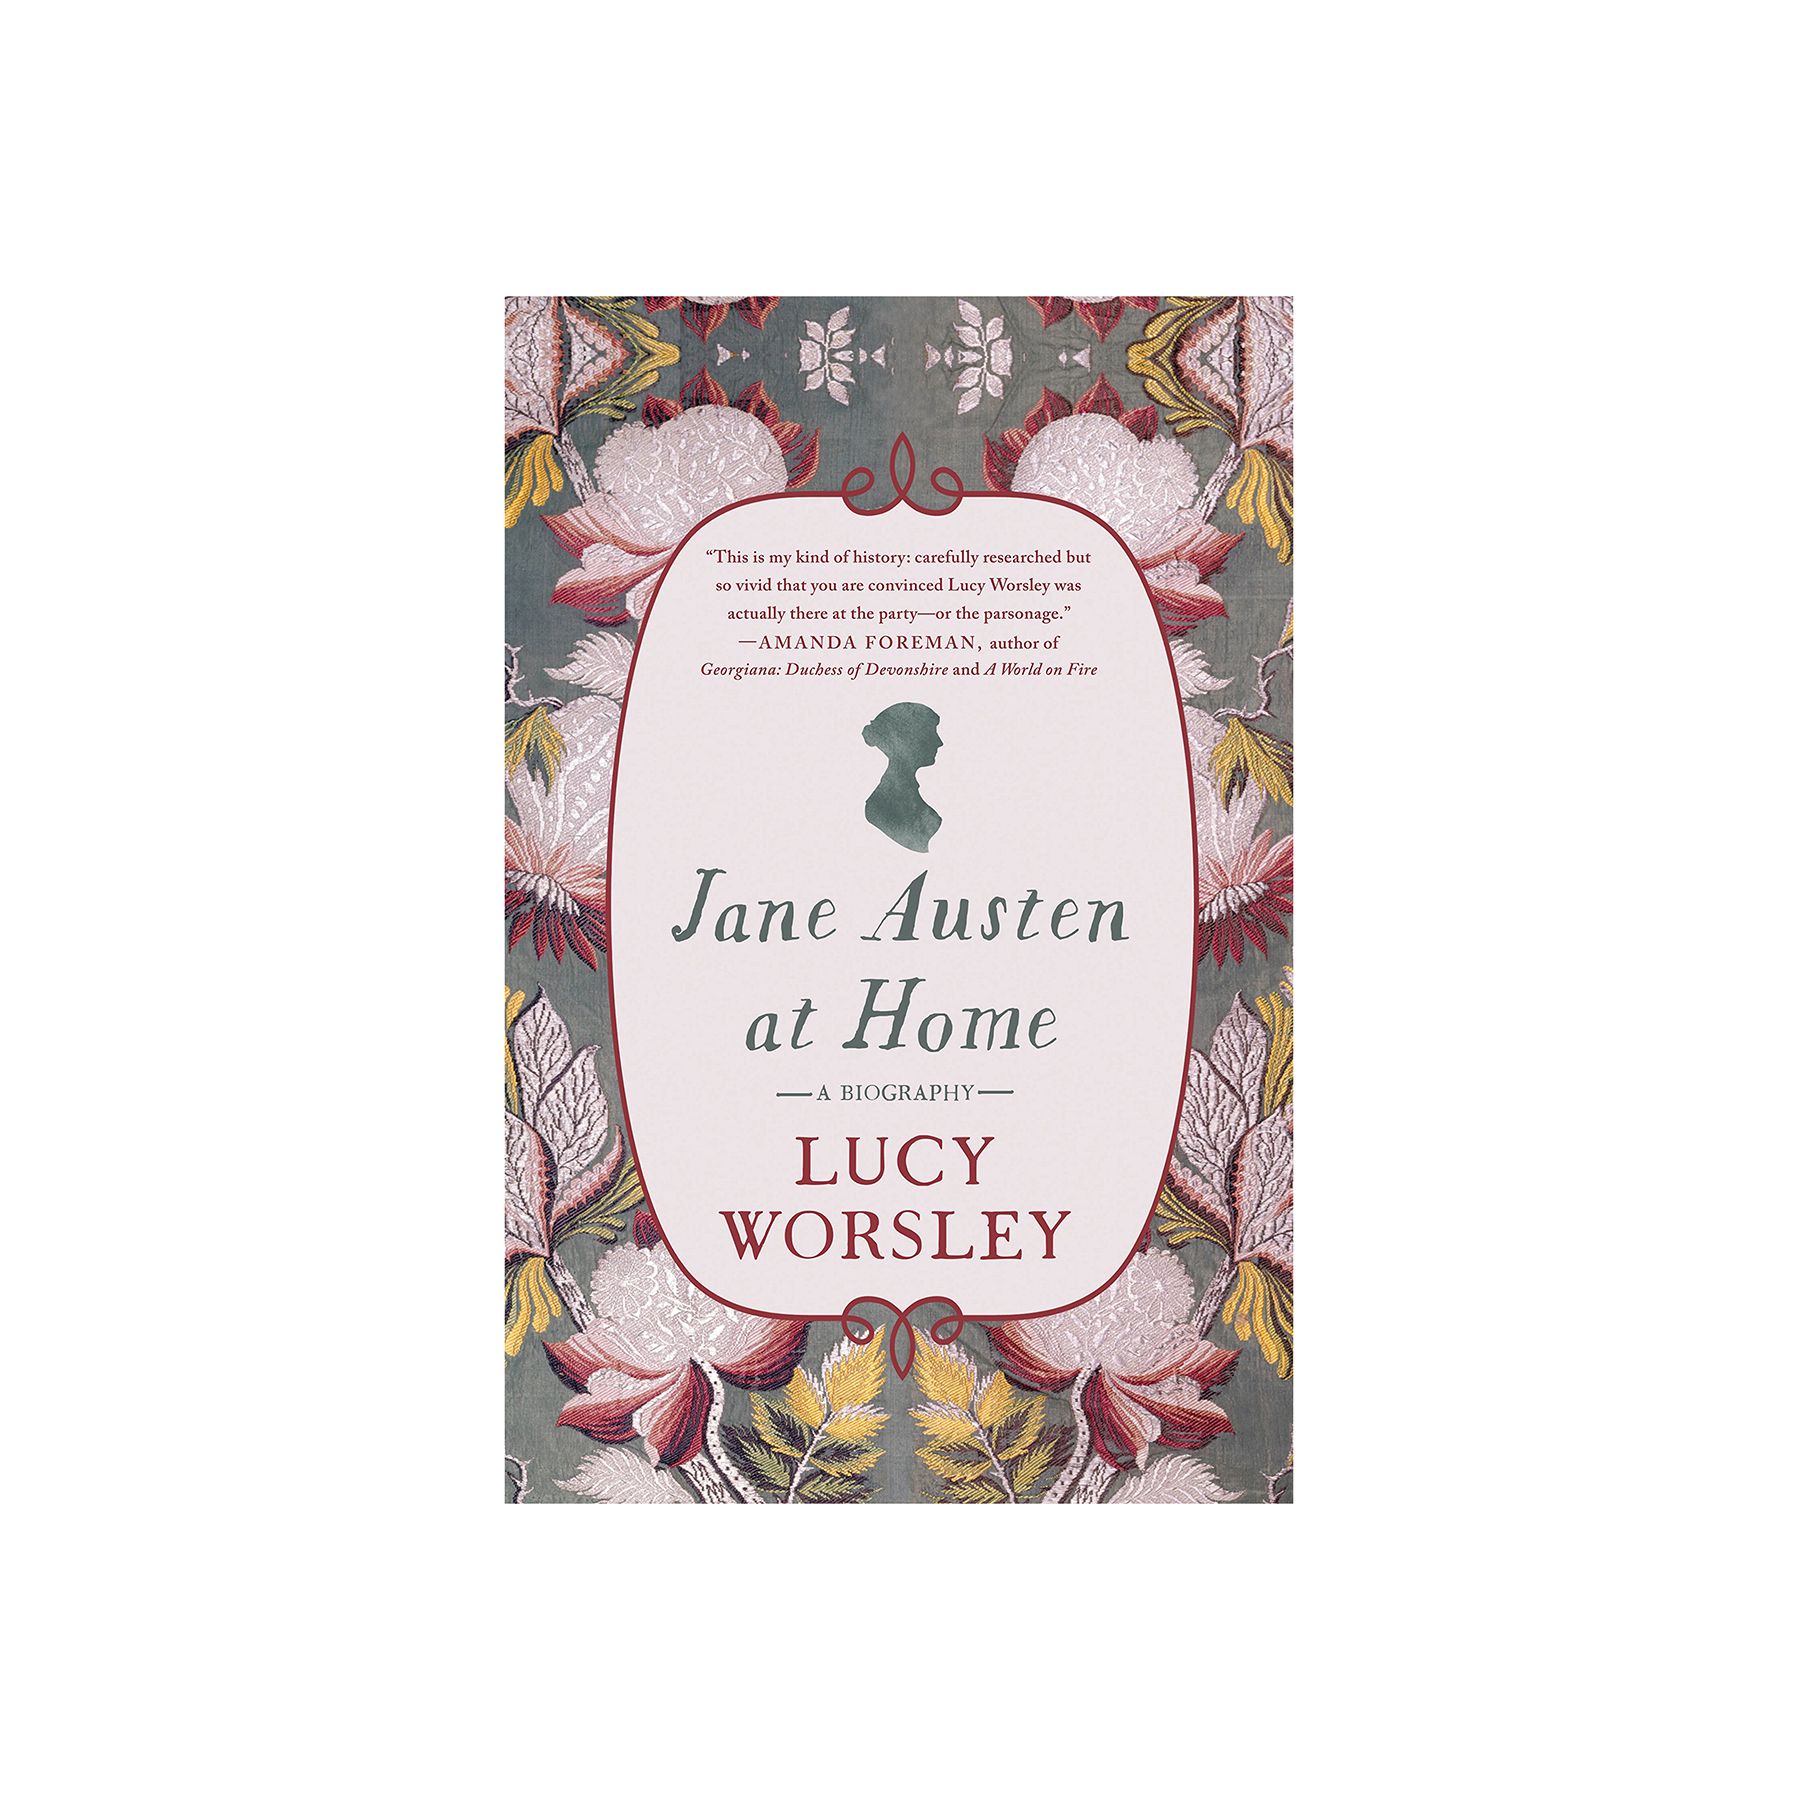 Jane Austen at Home: ชีวประวัติ โดย Lucy Worsley